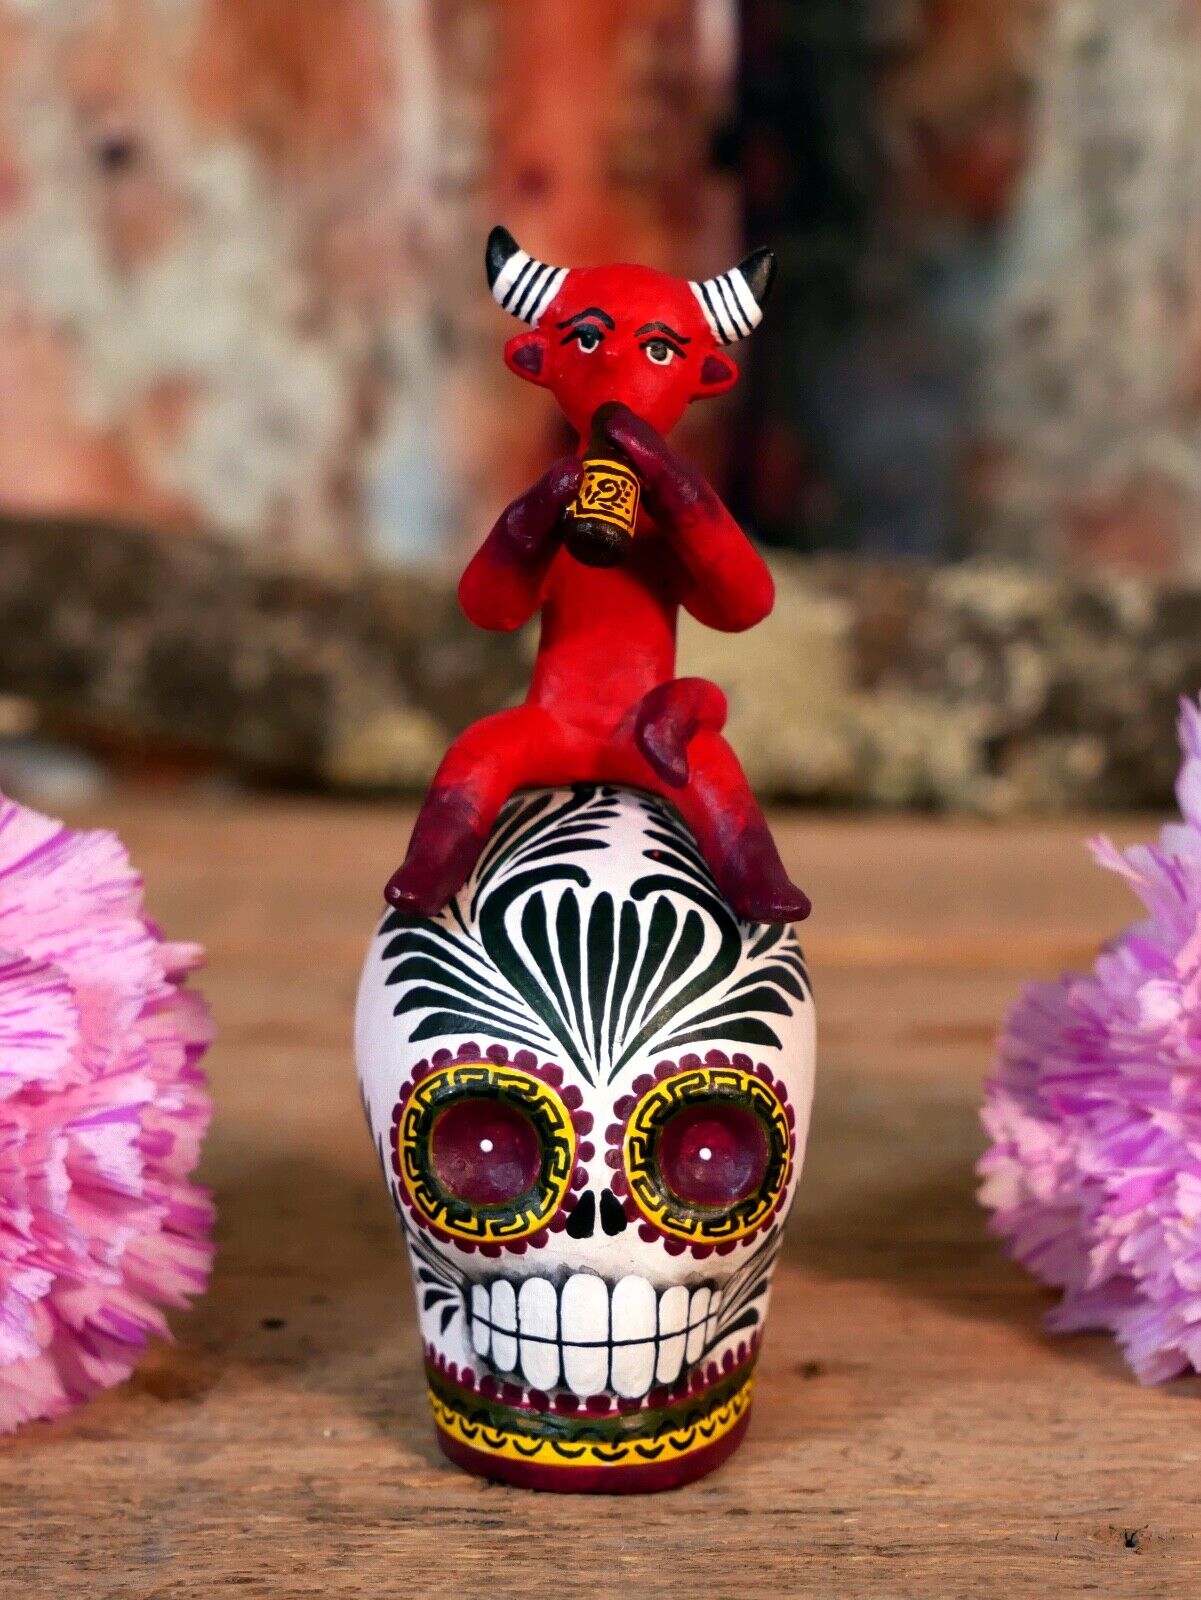 Sm Sugar Skull Devil Baby drinking Beer Day of the Dead Puebla Handmade Mexico